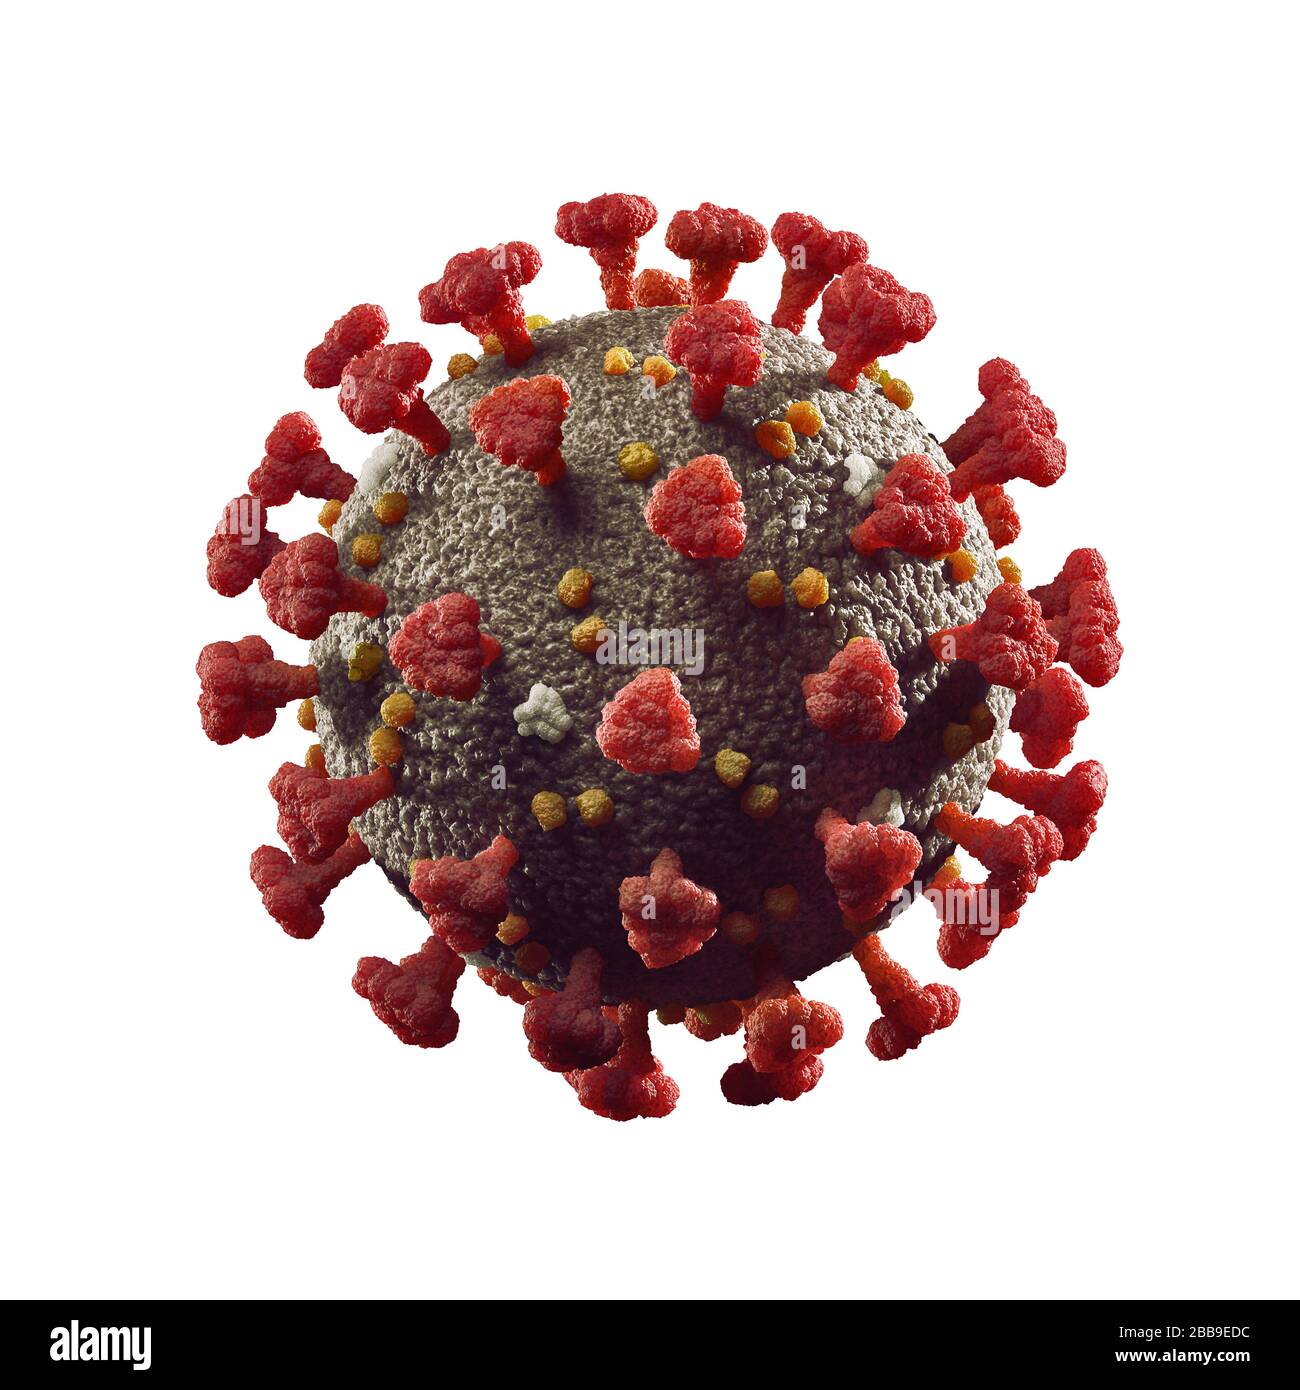 Coronavirus, COVID-19, SARS-CoV-2 Corona virus particle 3D illustration in color isolated on white background. Stock Photo